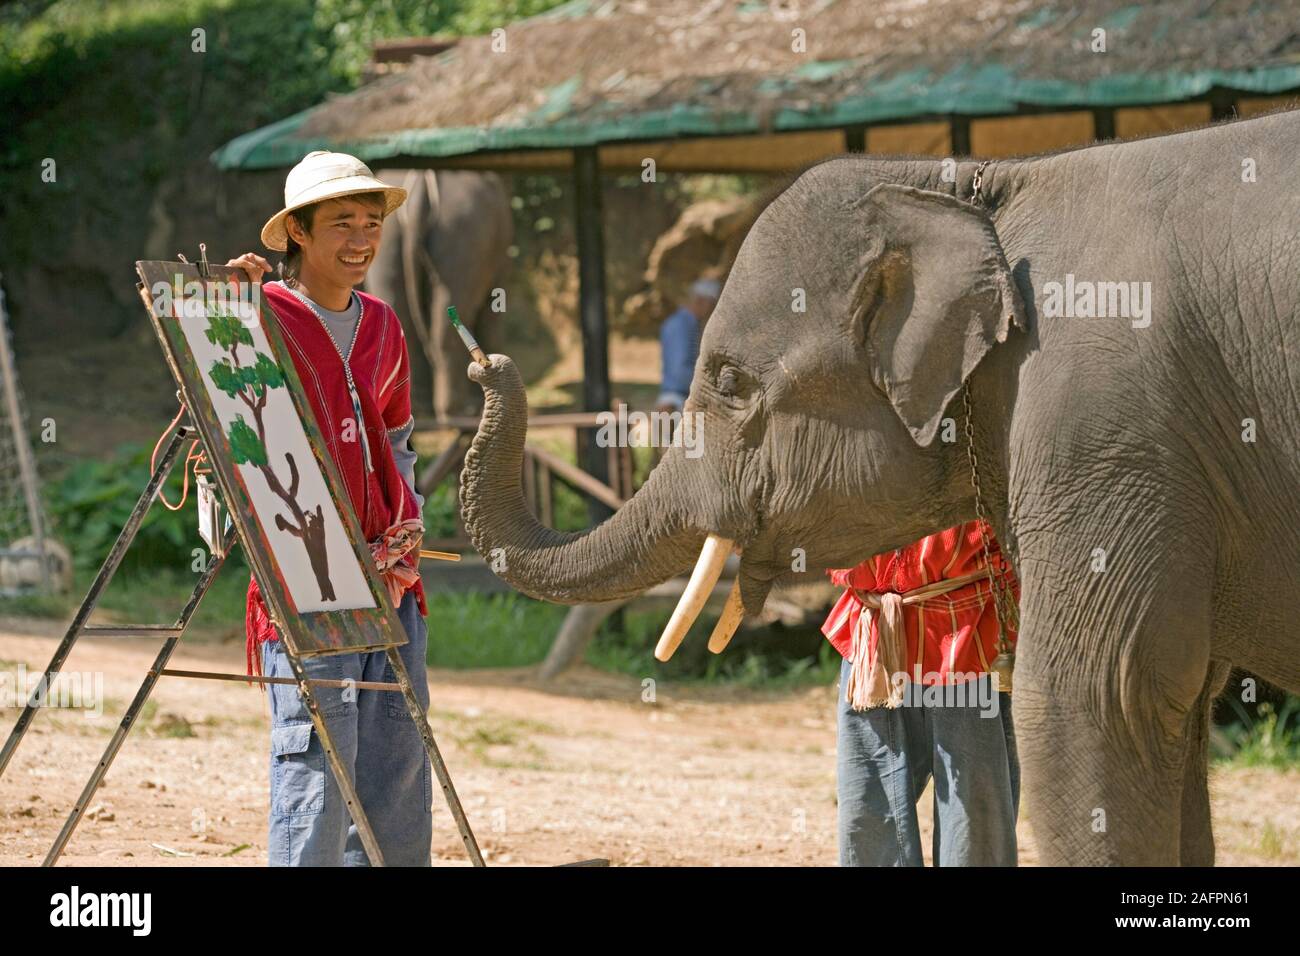 Elefante asiatico (Elephas maximus), addestrati a dipingere immagini, "tele" su cavalletti. Maesa Elephant Camp, Chiang Mai, Thailandia. Foto Stock